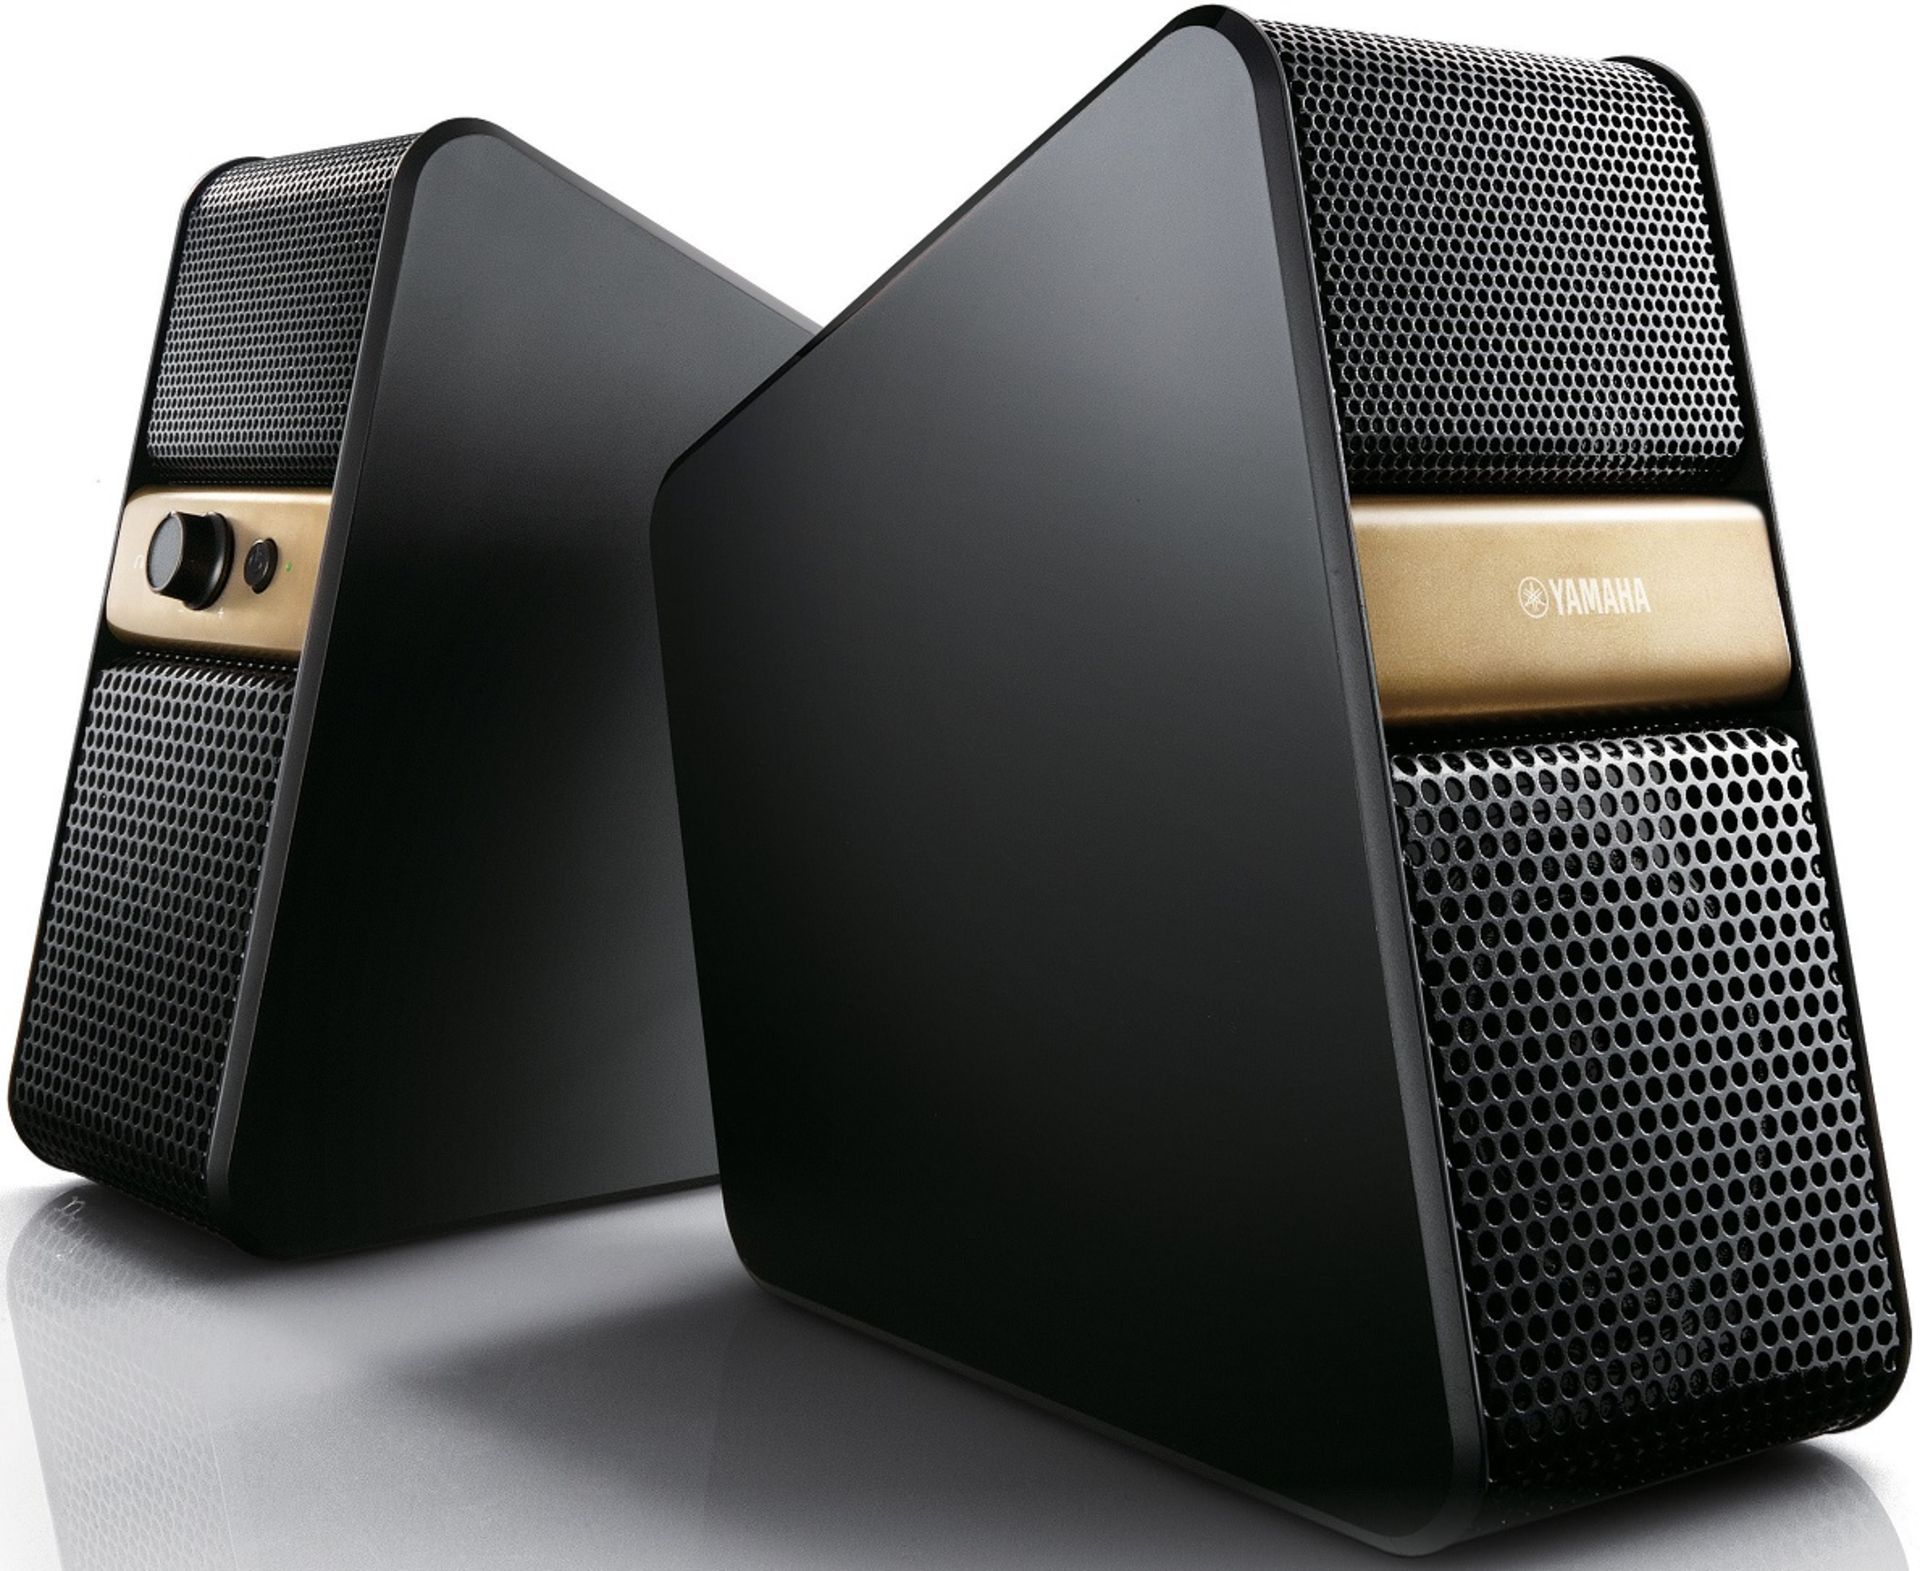 V Brand New Yamaha NX-B55 Bluetooth Speaker System Gold ISP £149.99 - Co-op Price £149.99